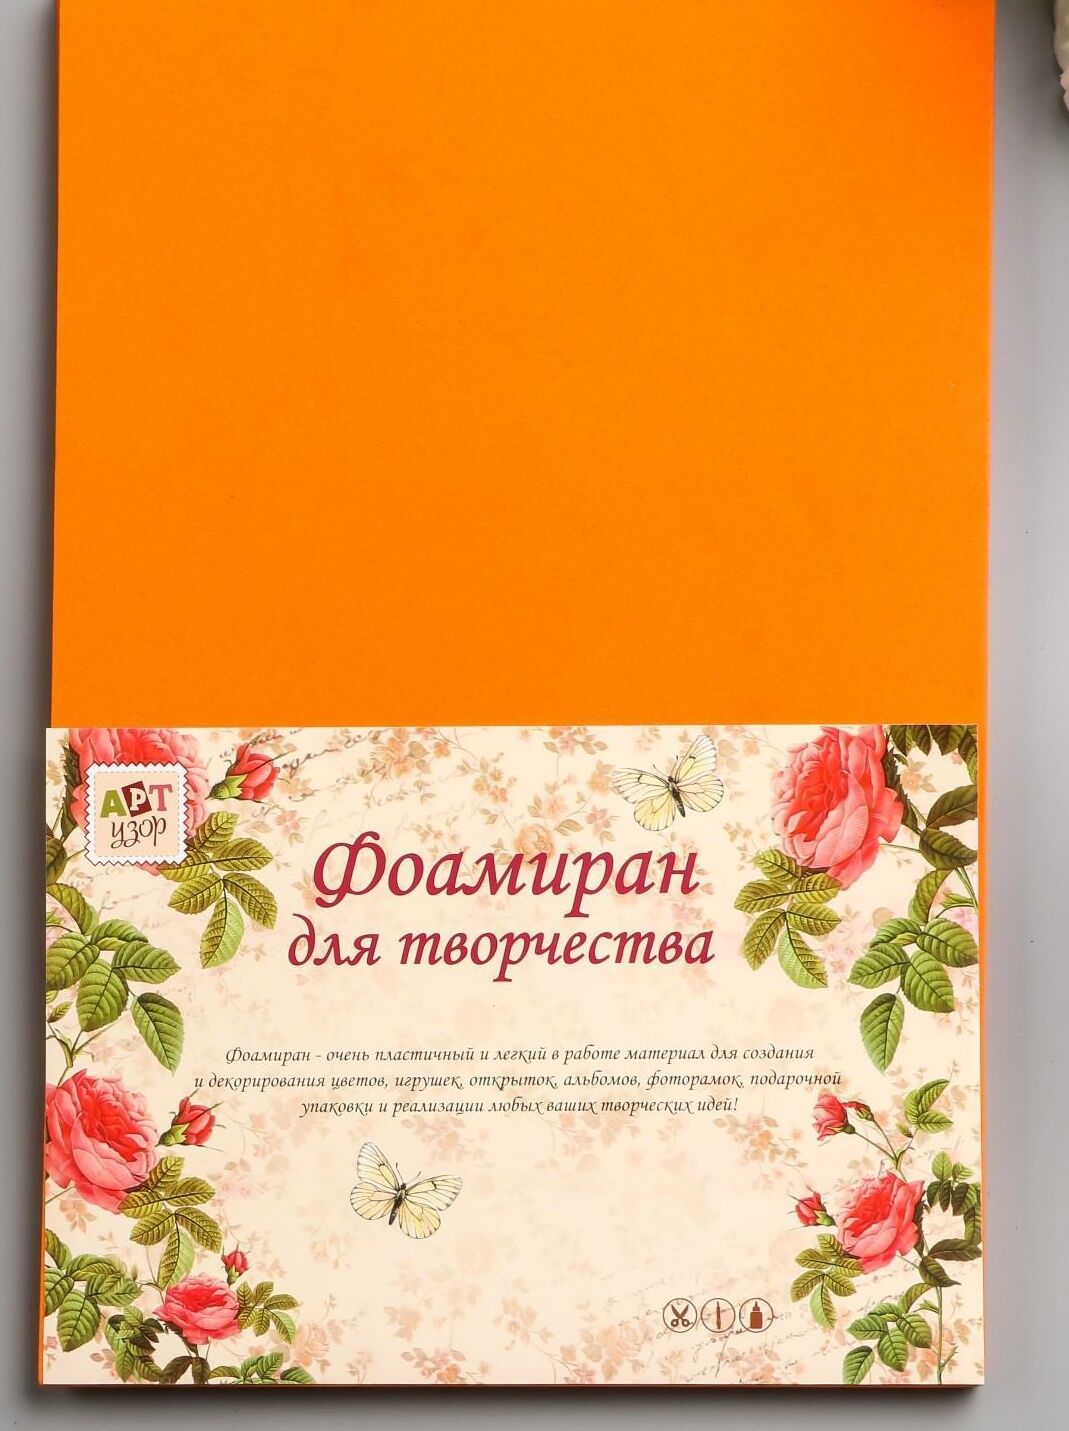 Фоамиран "Апельсин" 2 мм (набор 5 листов) формат А4